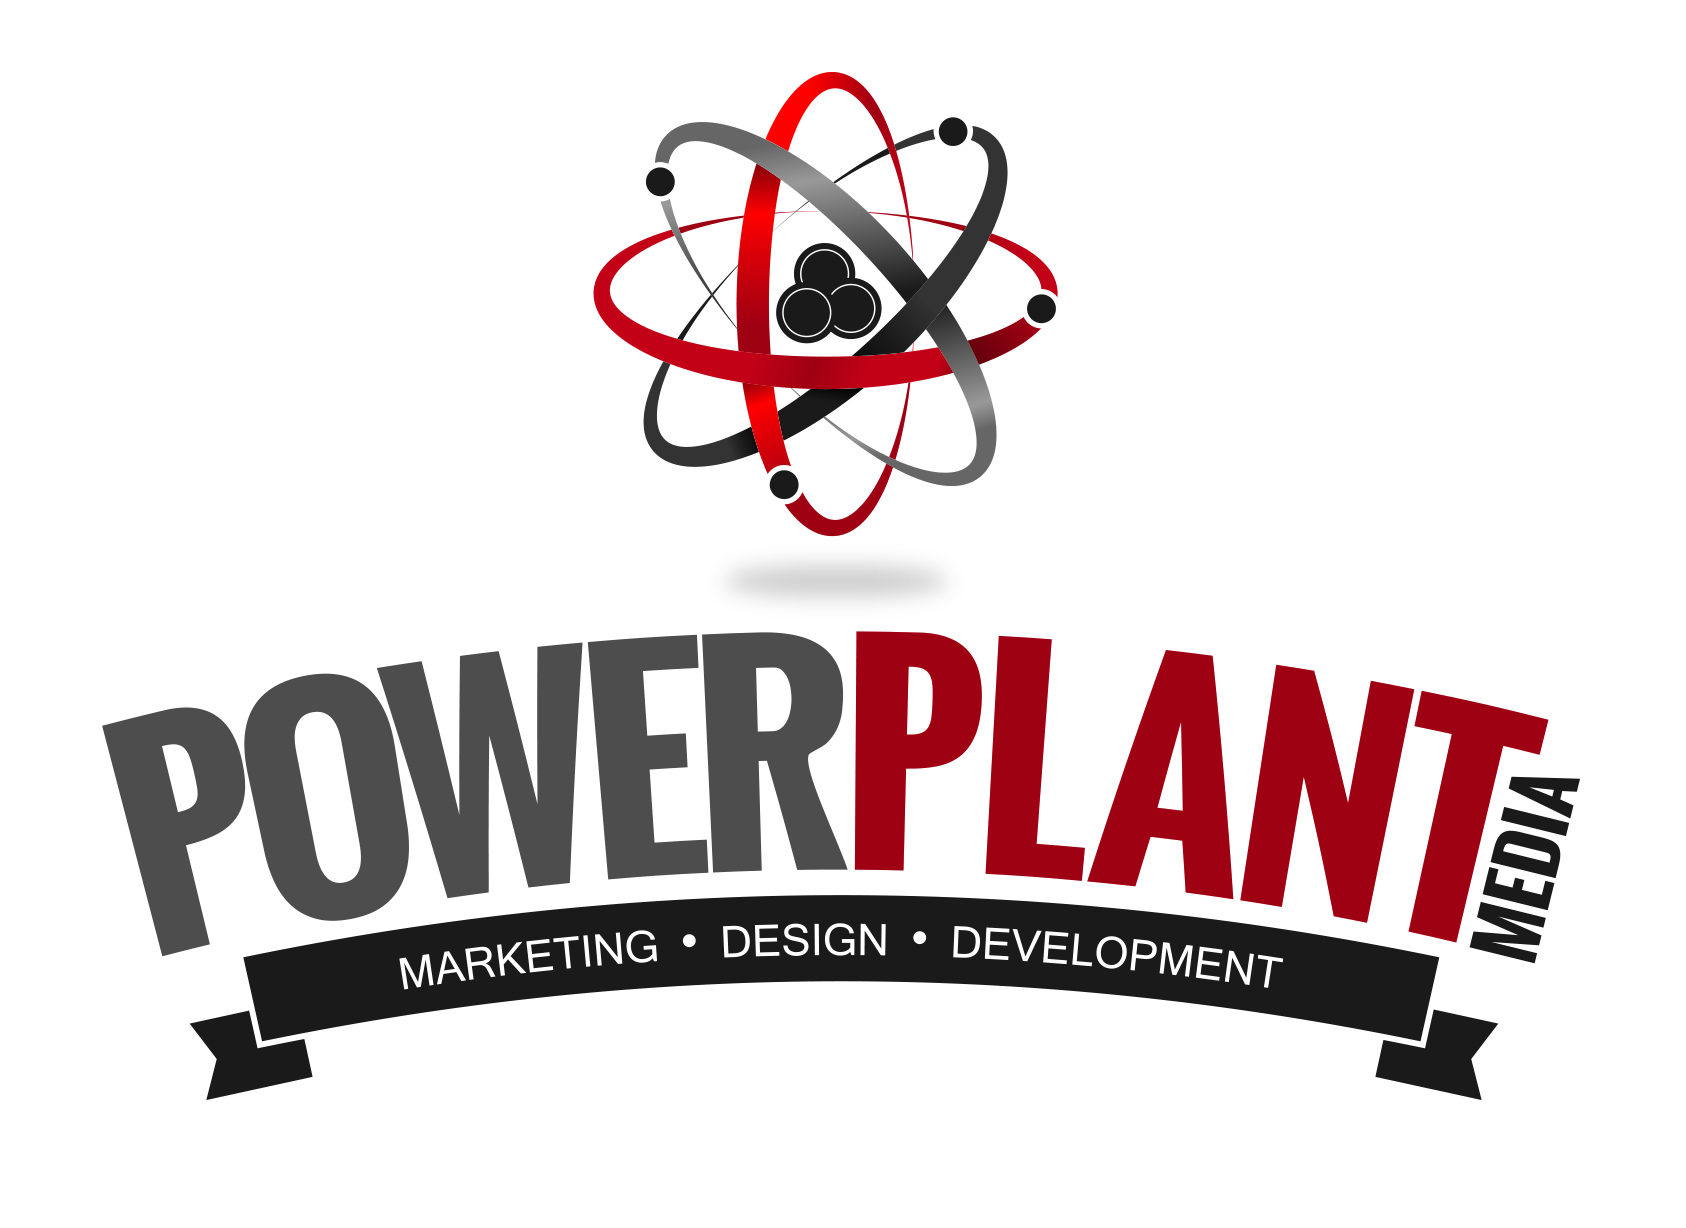 Power Plant Media - Marketing, Design, and Development